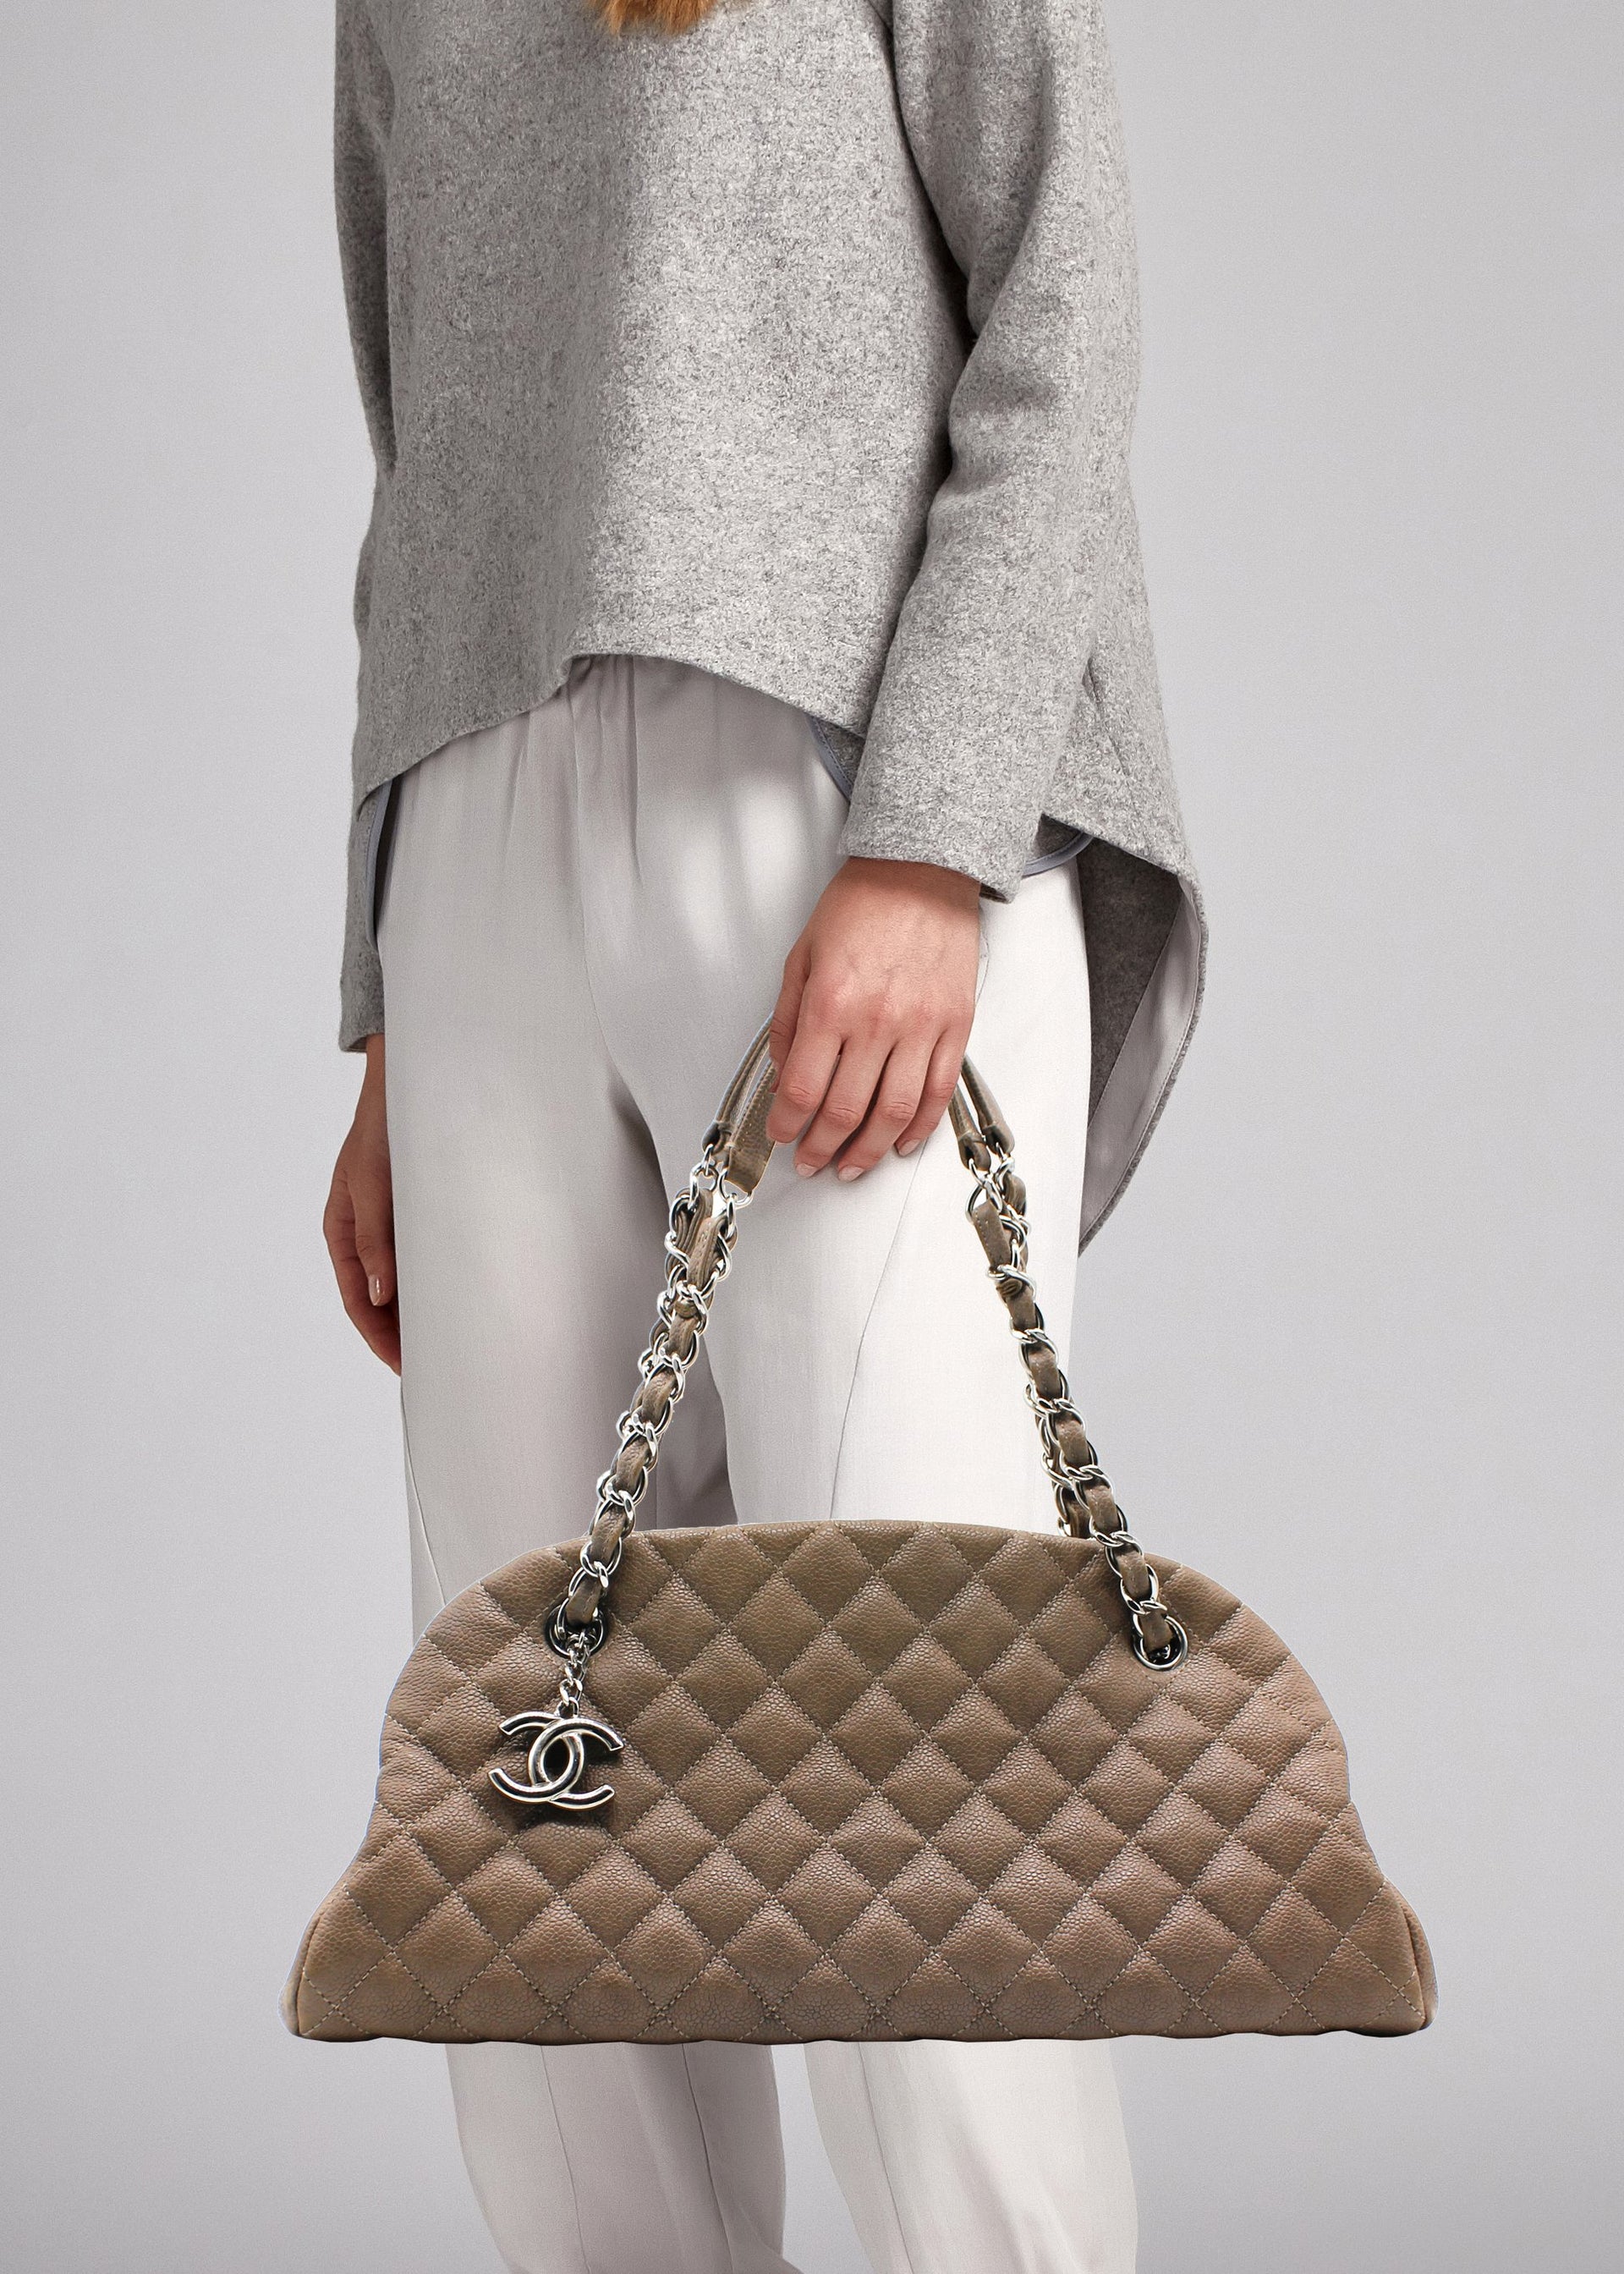 mademoiselle chanel handbag